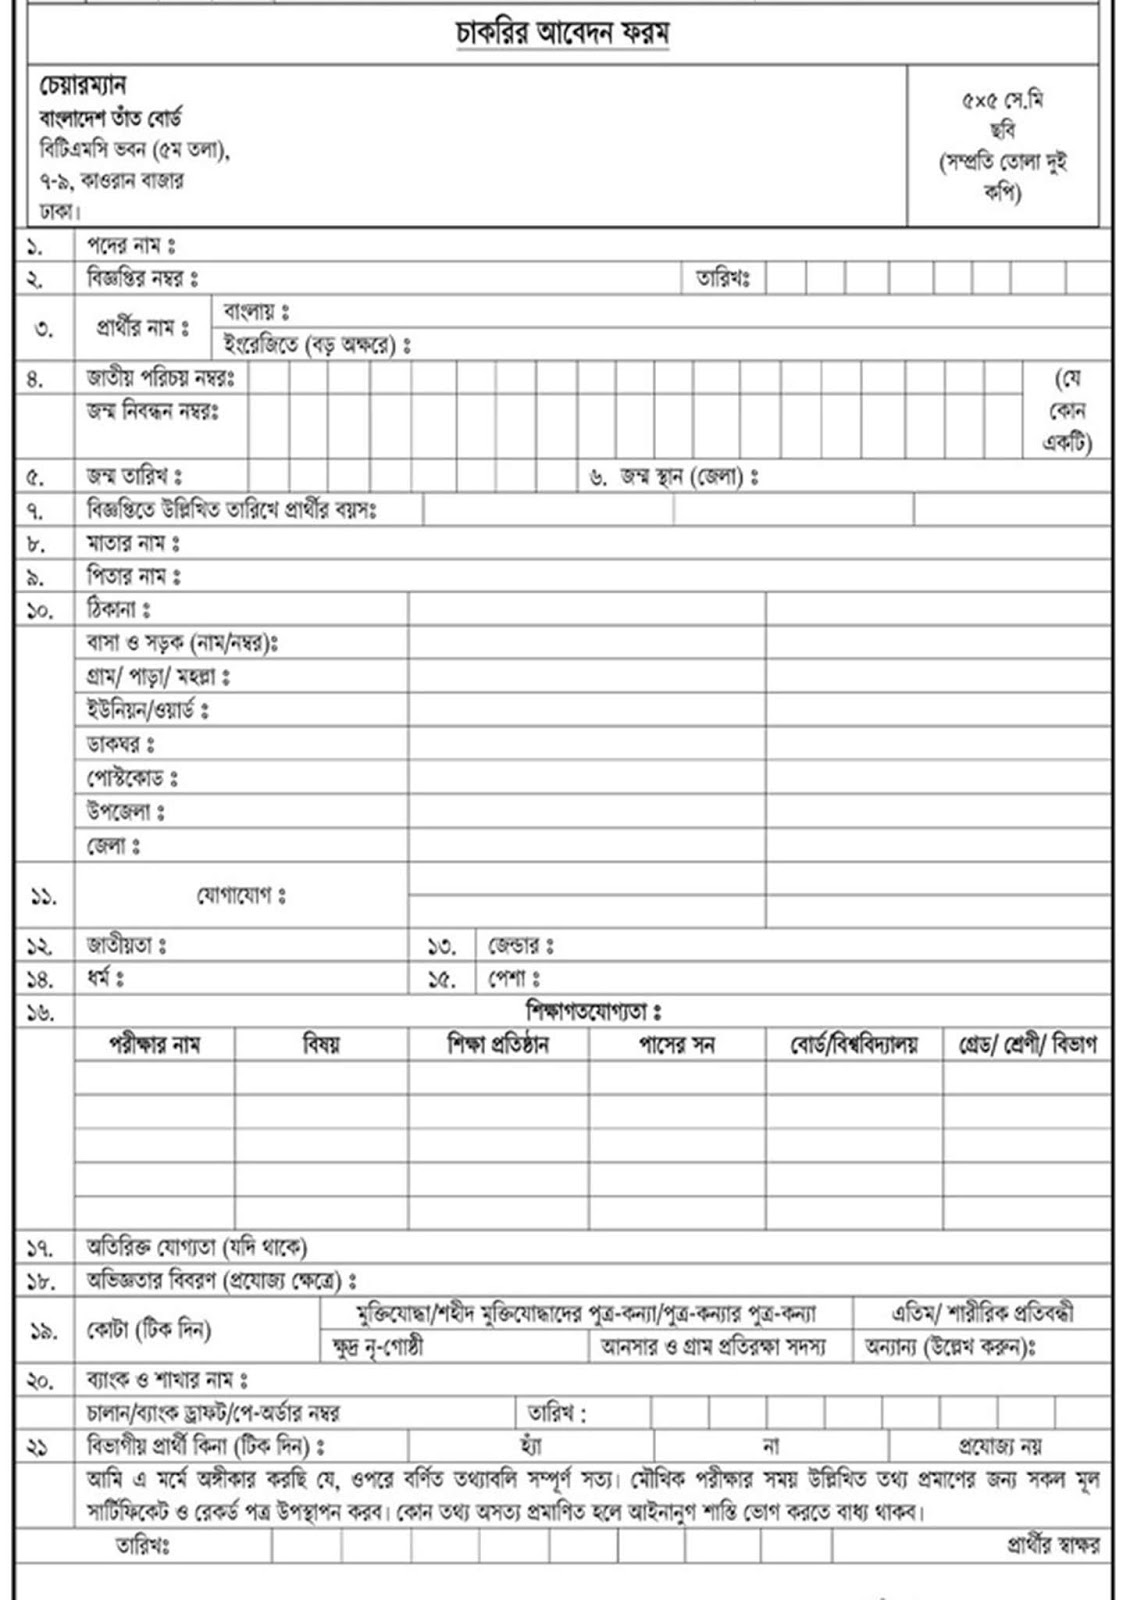 Bangladesh Handloom Board (BHB) Application Form